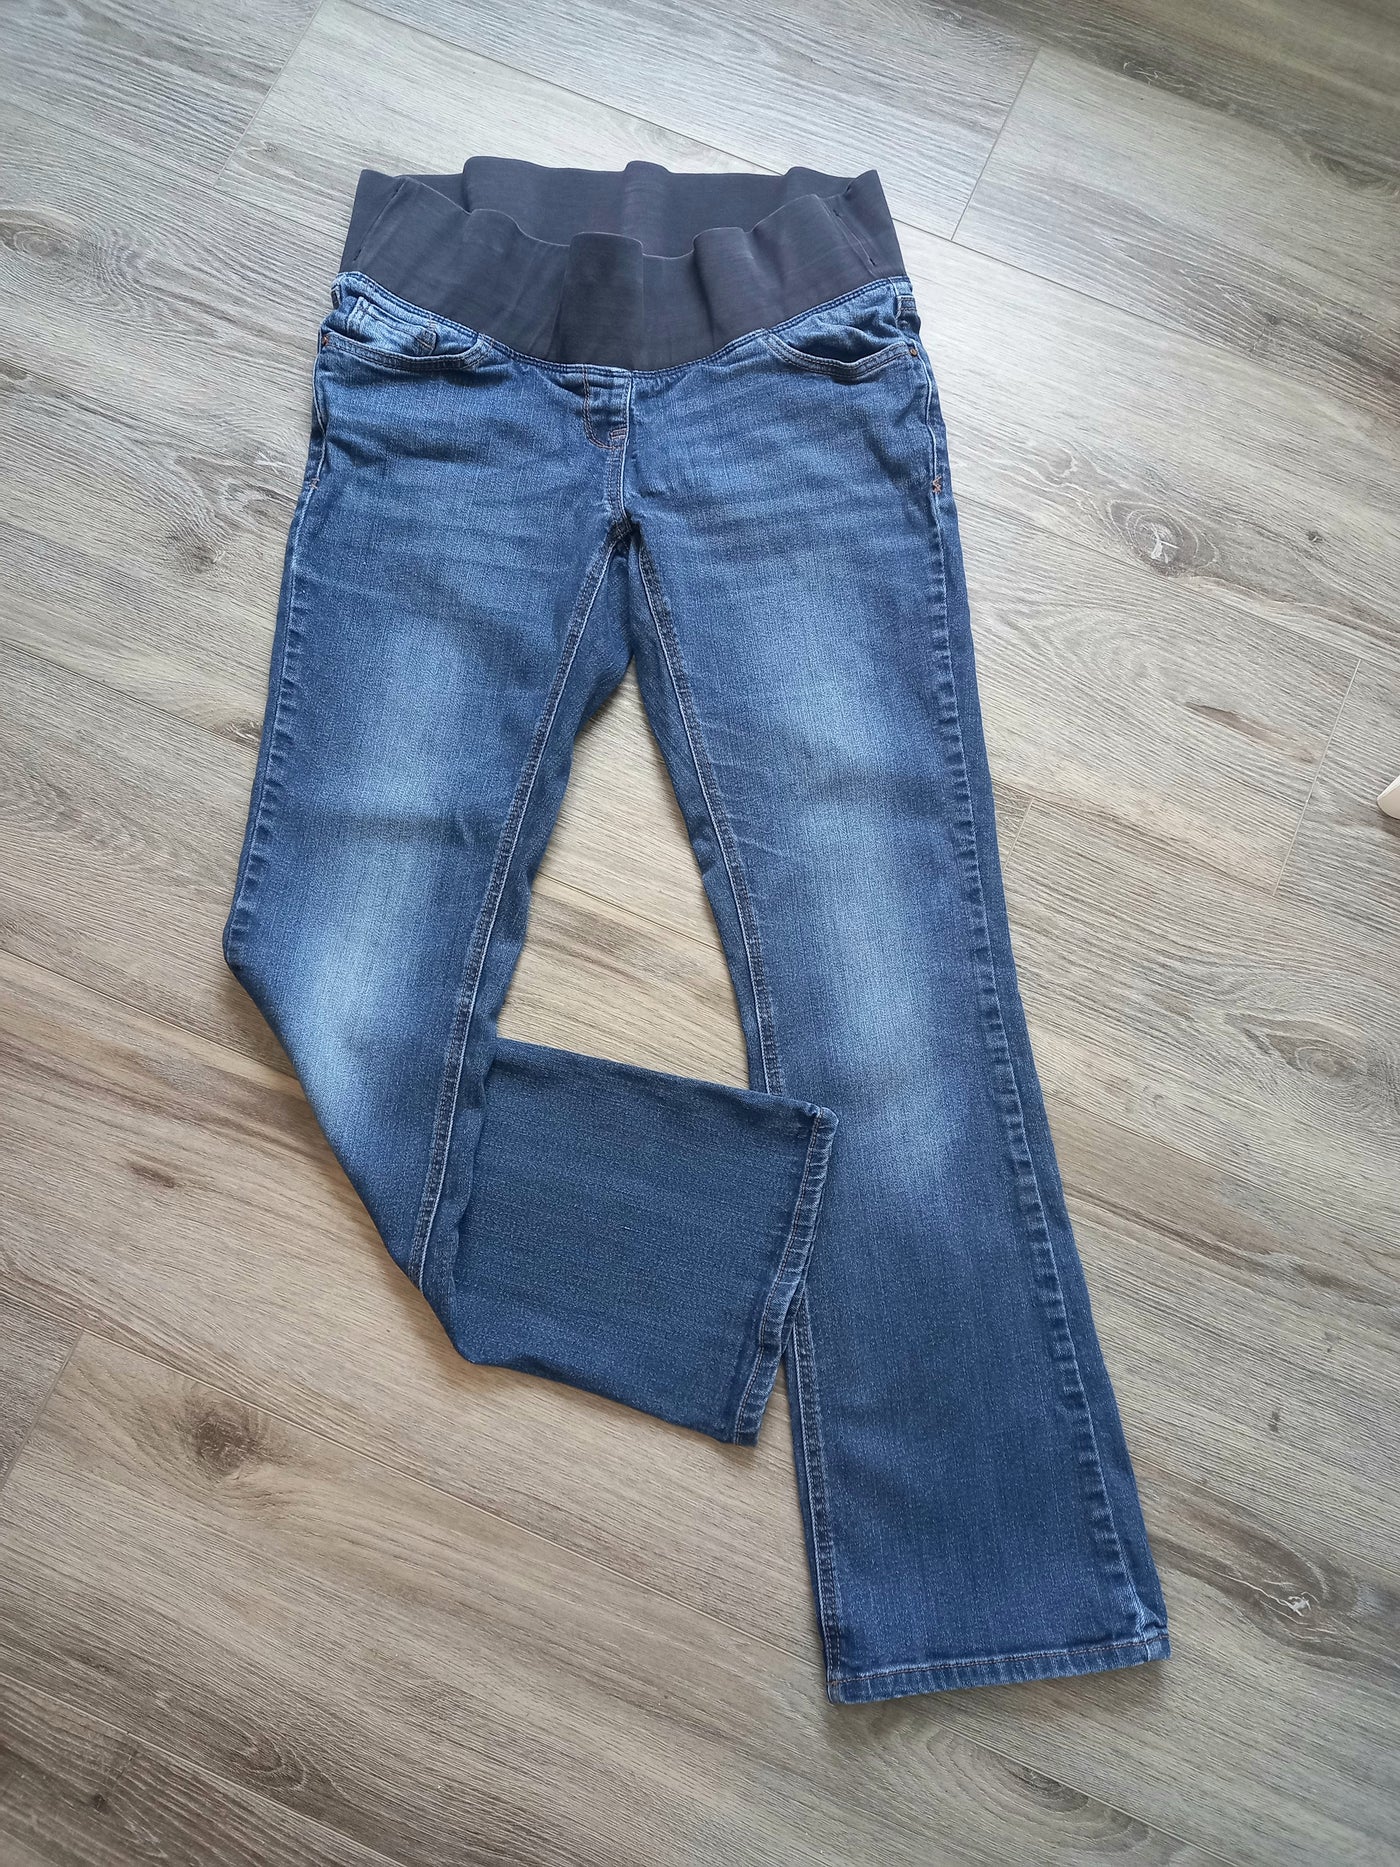 Next Maternity blue underbump bootcut jeans - Size 14R